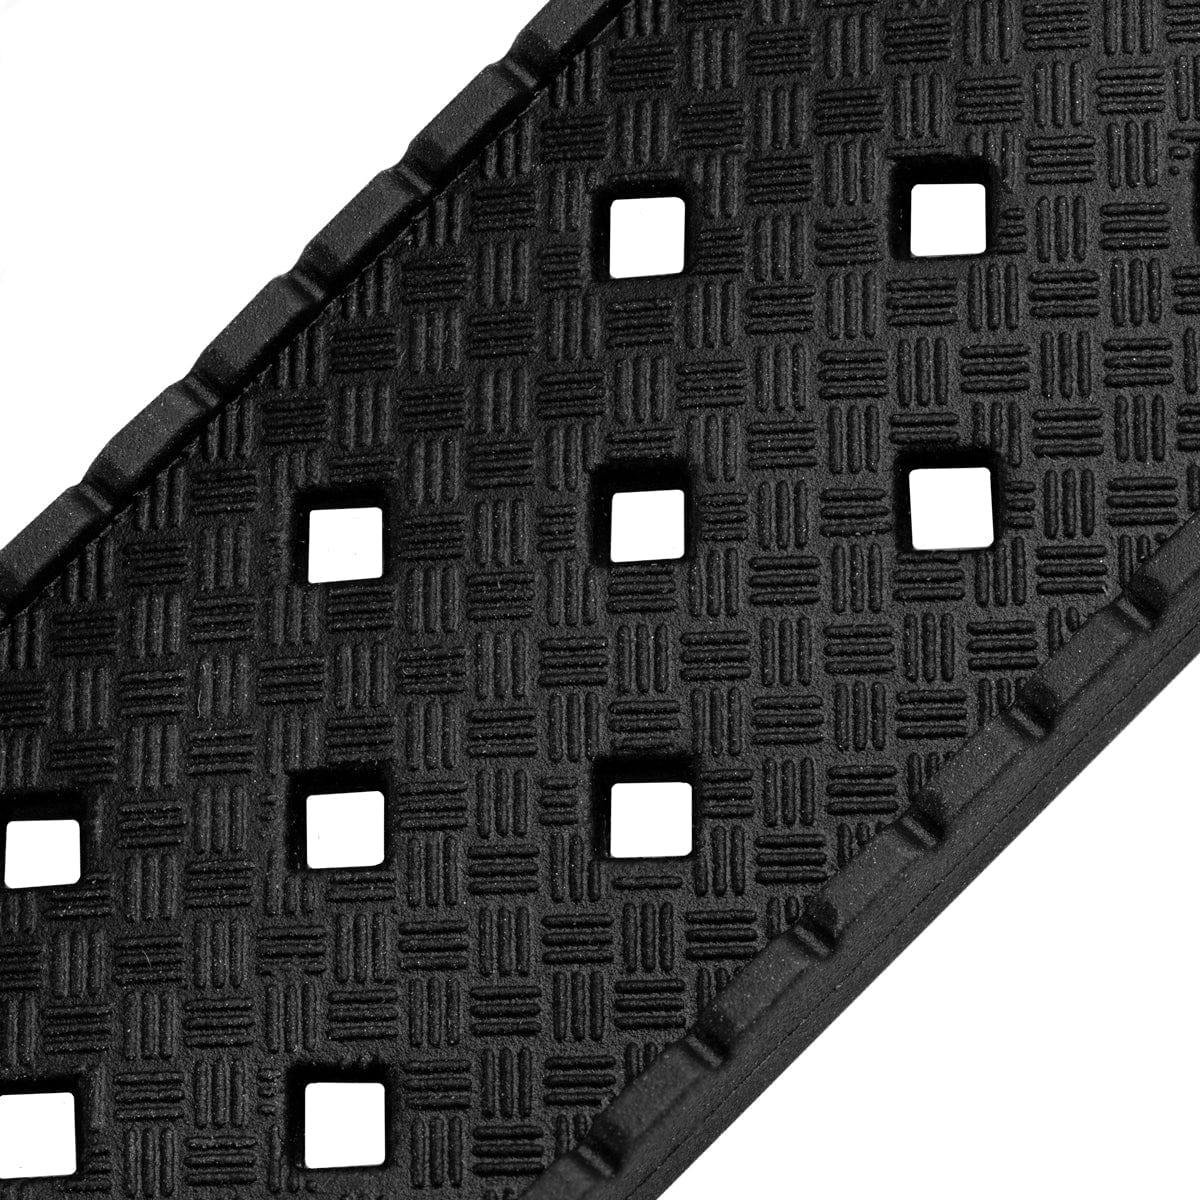 ZULUDIVER Modern Tropical Style Rubber Watch Strap - Black